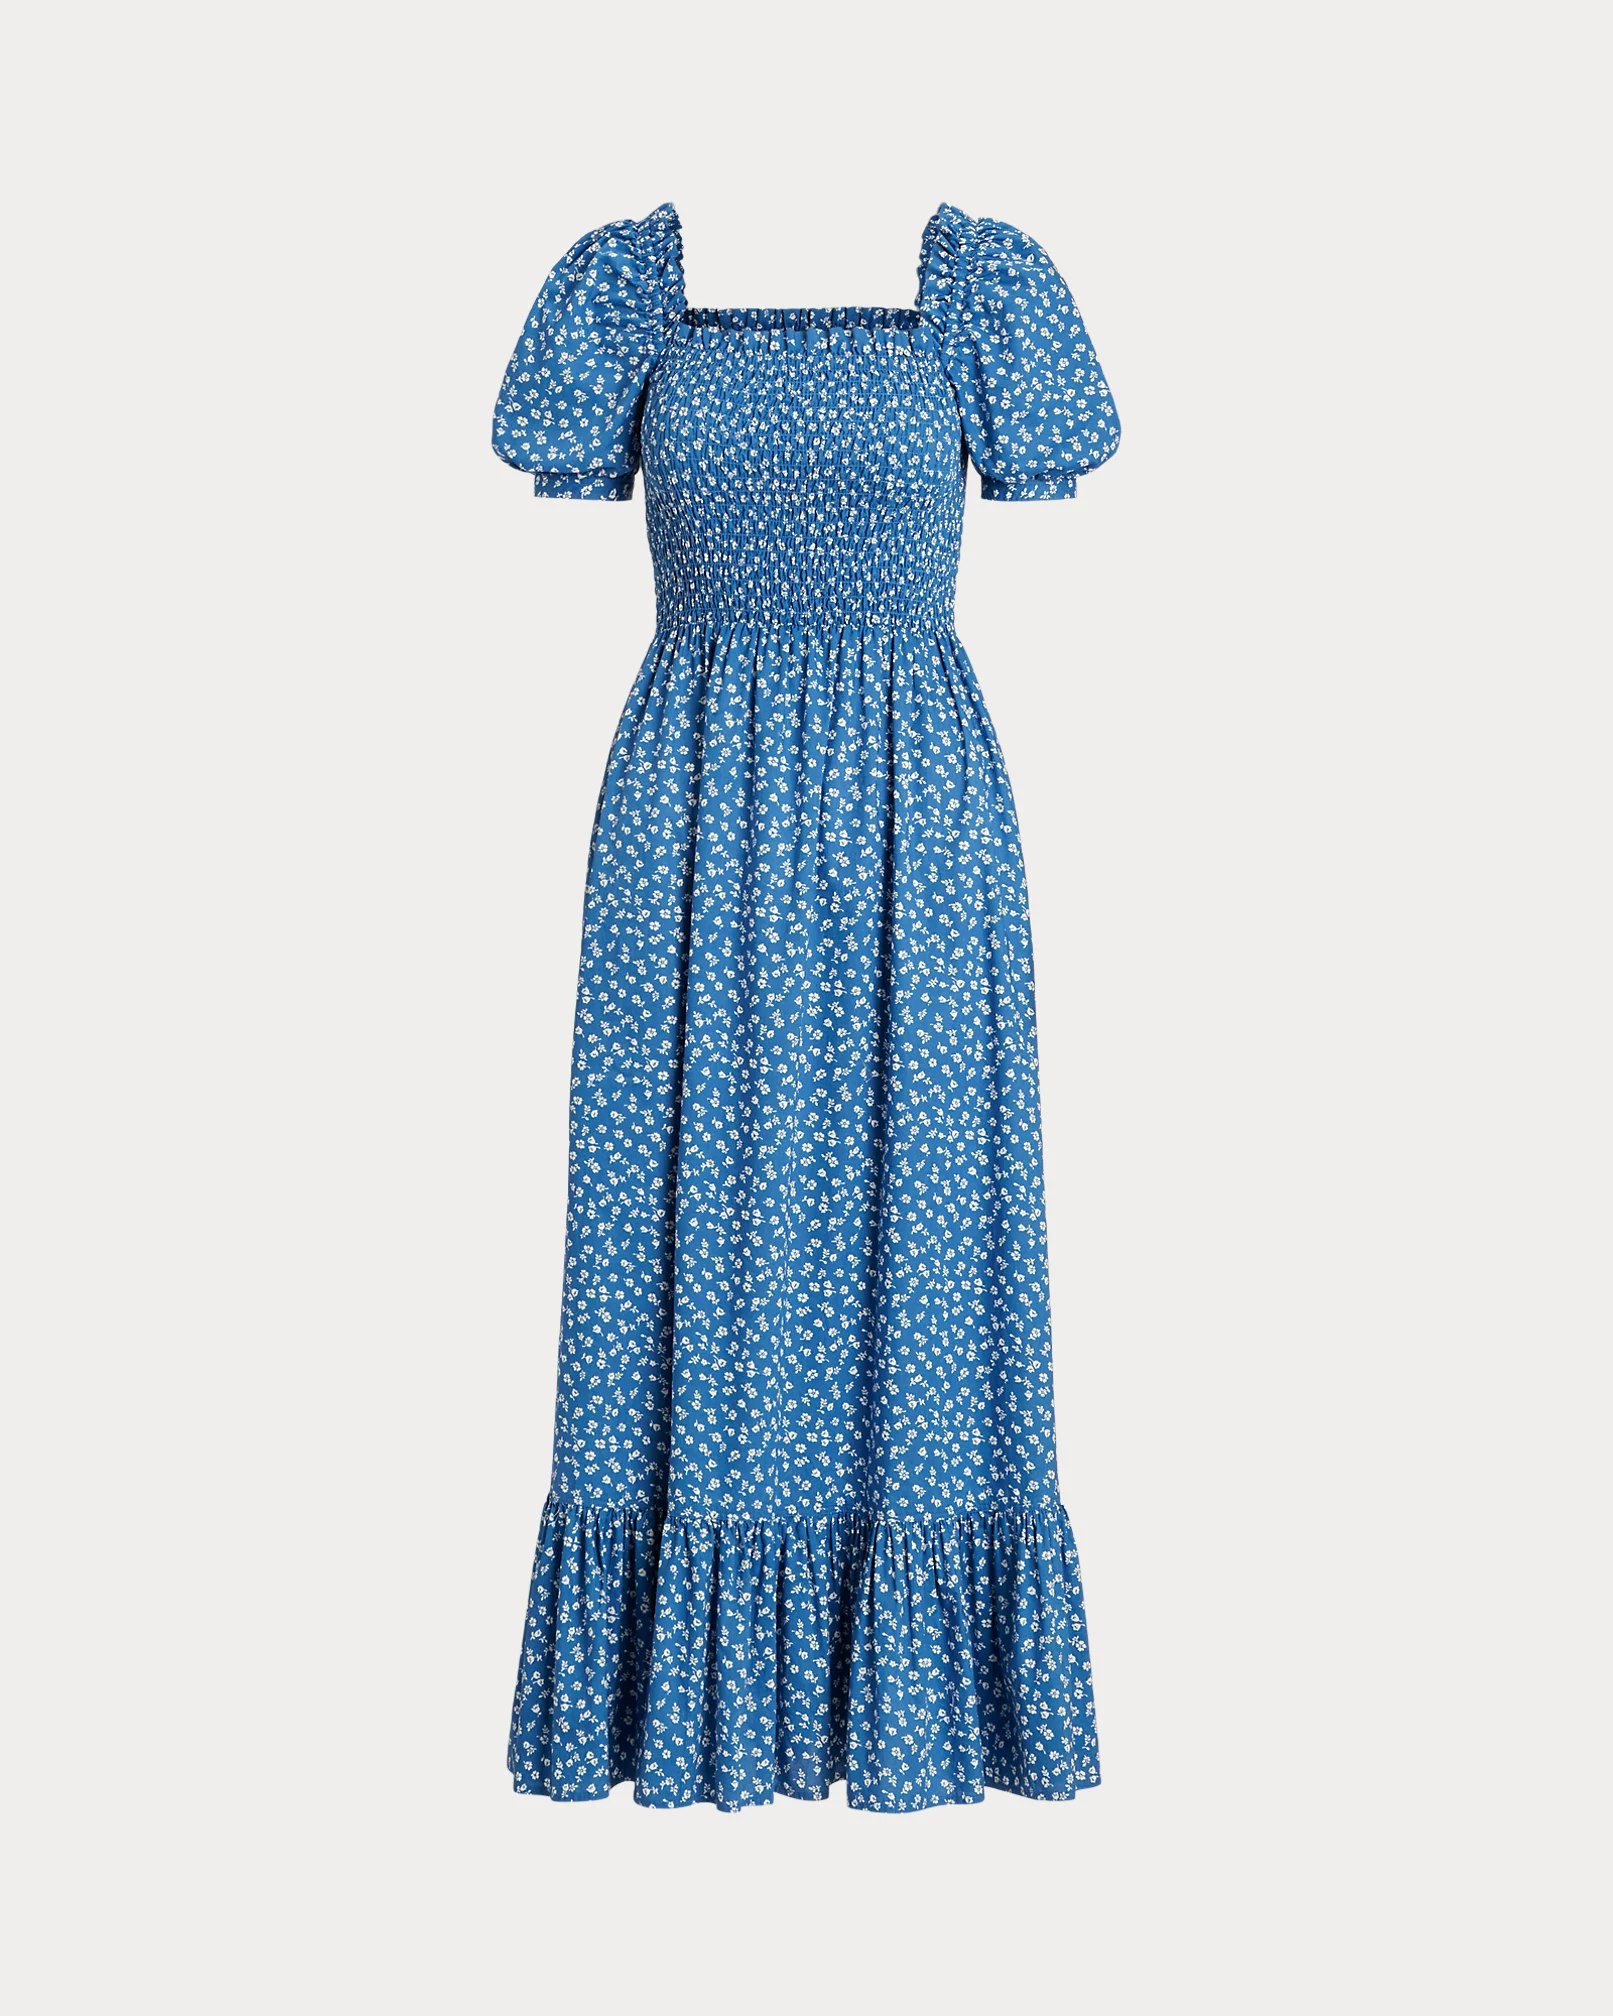 Polo Ralph Lauren - Floral Smocked Cotton Dress